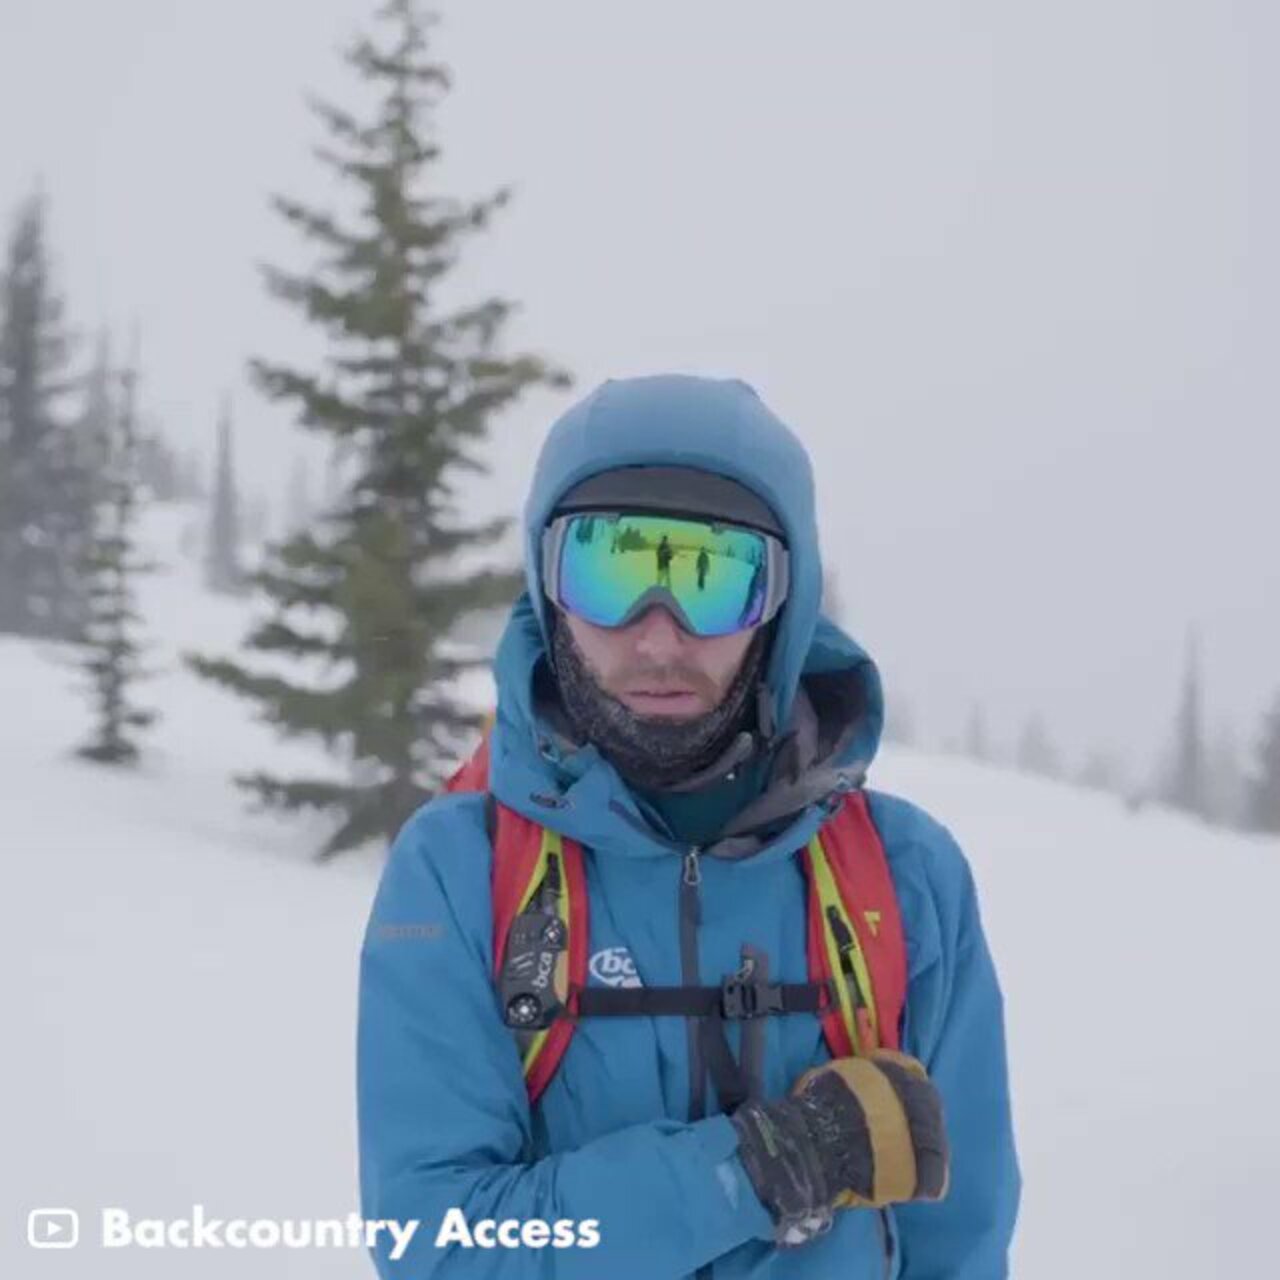 This Avalanche #airbag pack enhances safety while skiing #snowboarding and #snowmobiling By @gigadgets_ #TechForGood #innovation #Tech #Safetyfirst #Socialmedia Cc: @CurieuxExplorer @FrRonconi @JeroenBartelse @KanezaDiane @AshokNellikar @sebbourguignon @baski_LA @PawlowskiMario https://t.co/NCLXfaZga7